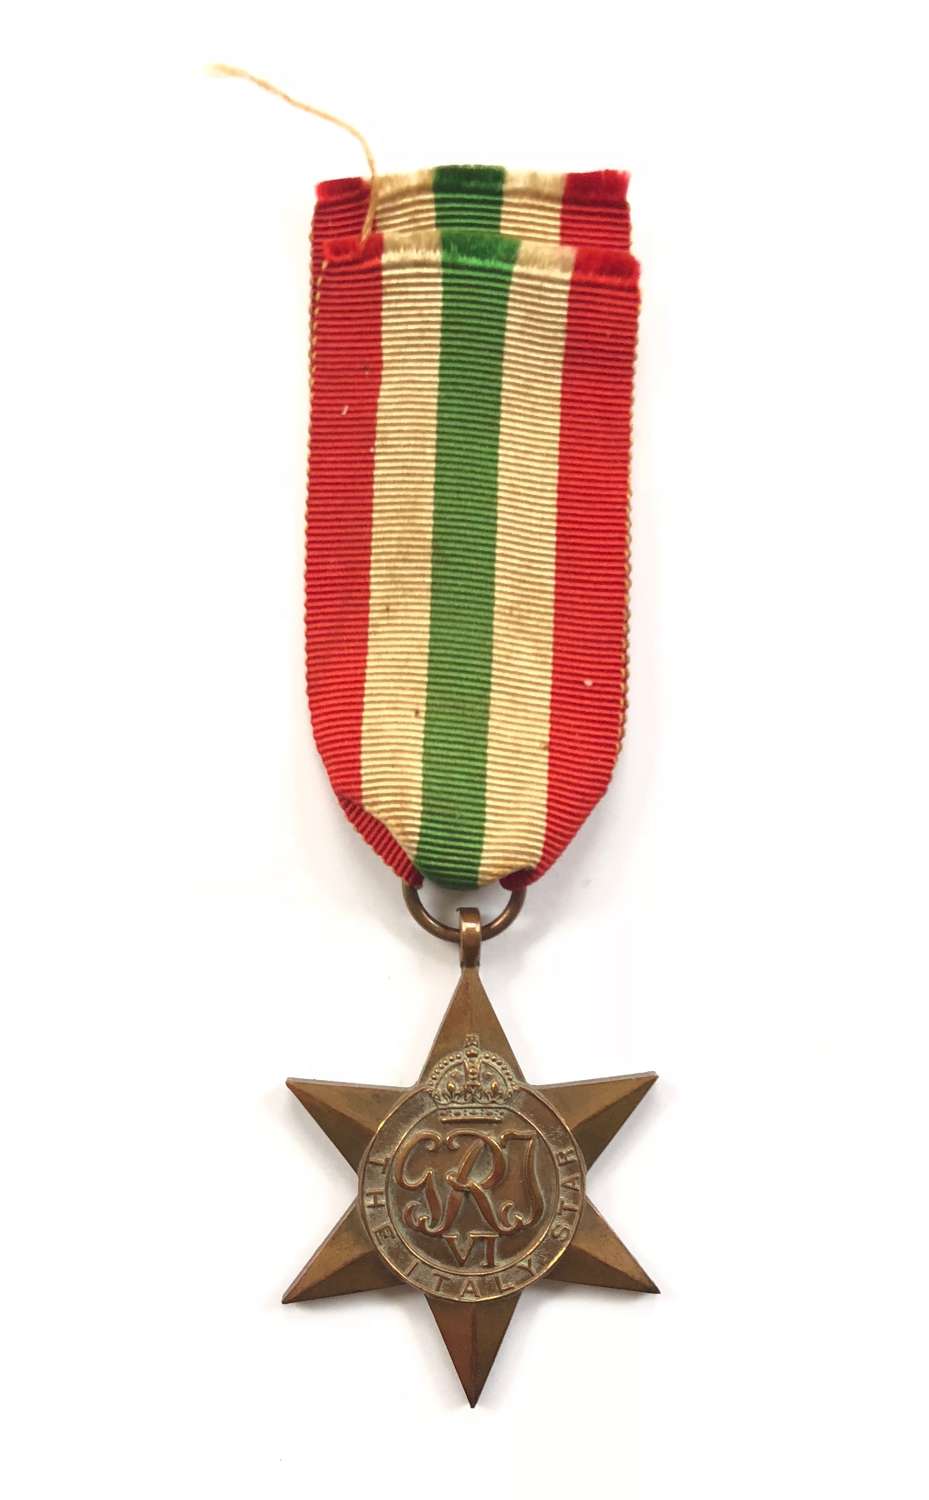 WW2 Italy Star Medal Retaining original Period Ribbon.